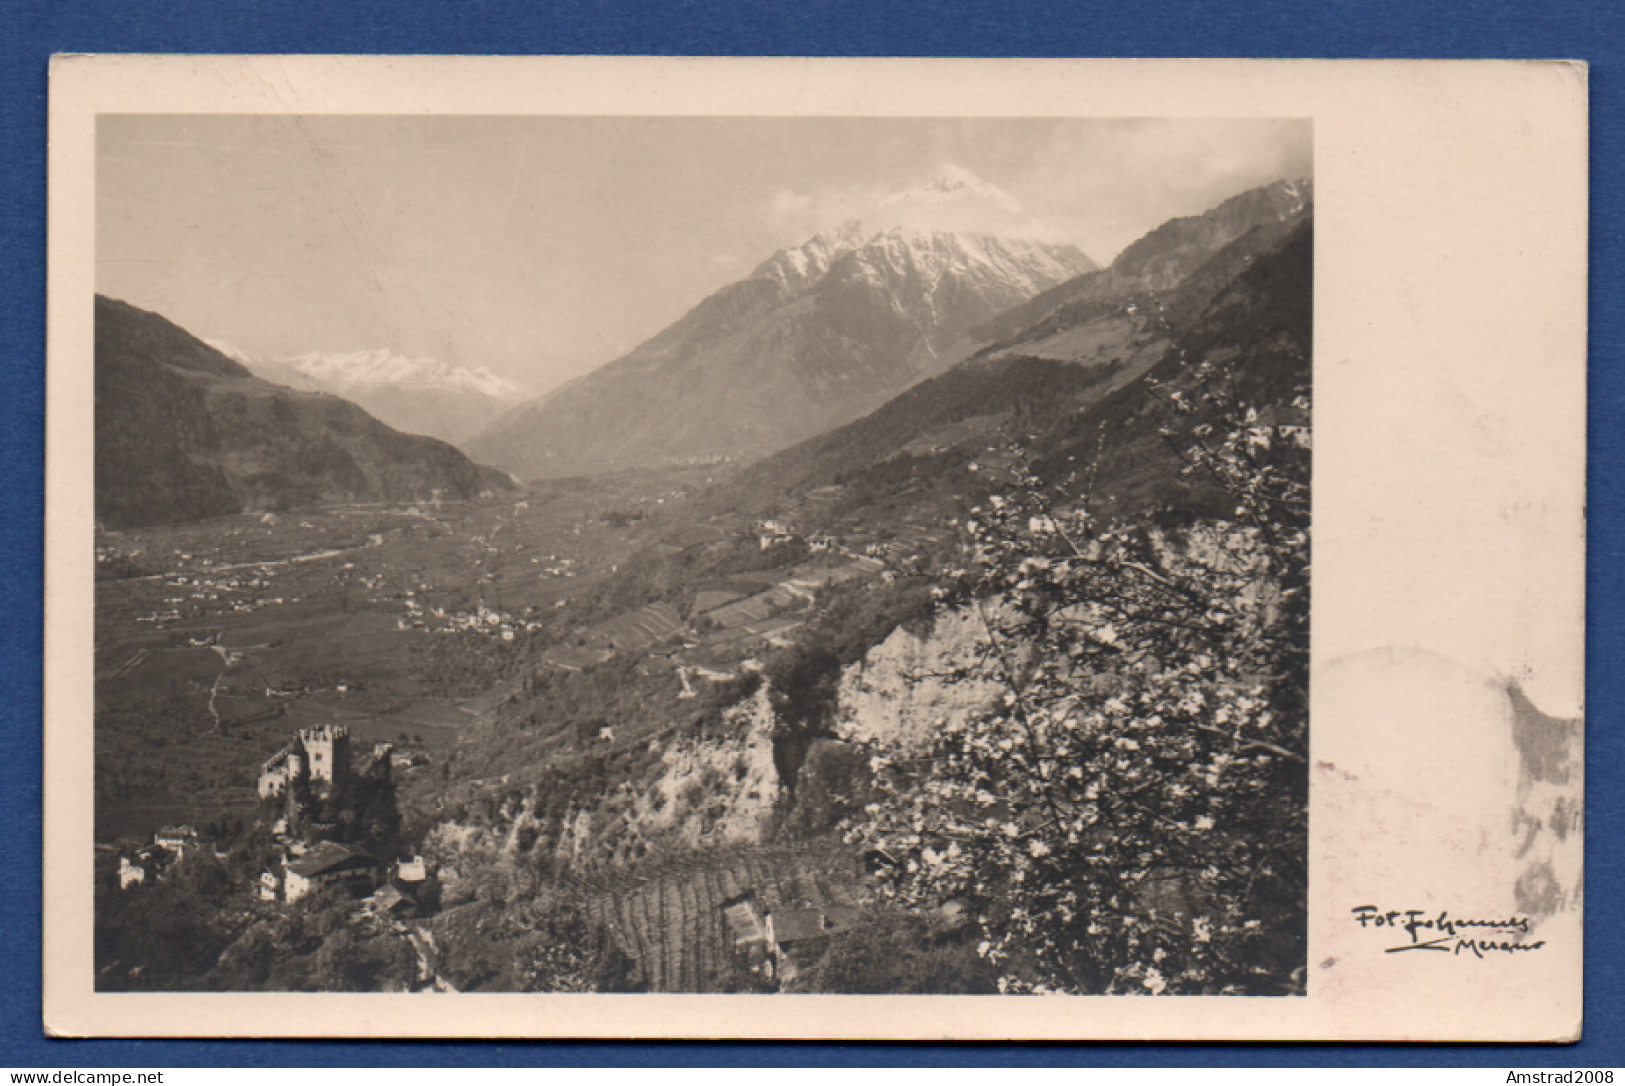 1933 - MERANO - MERAN - TRENTINO ALTO ADIGE - SUDTRIOL -  ITALIA - ITALIE - Merano